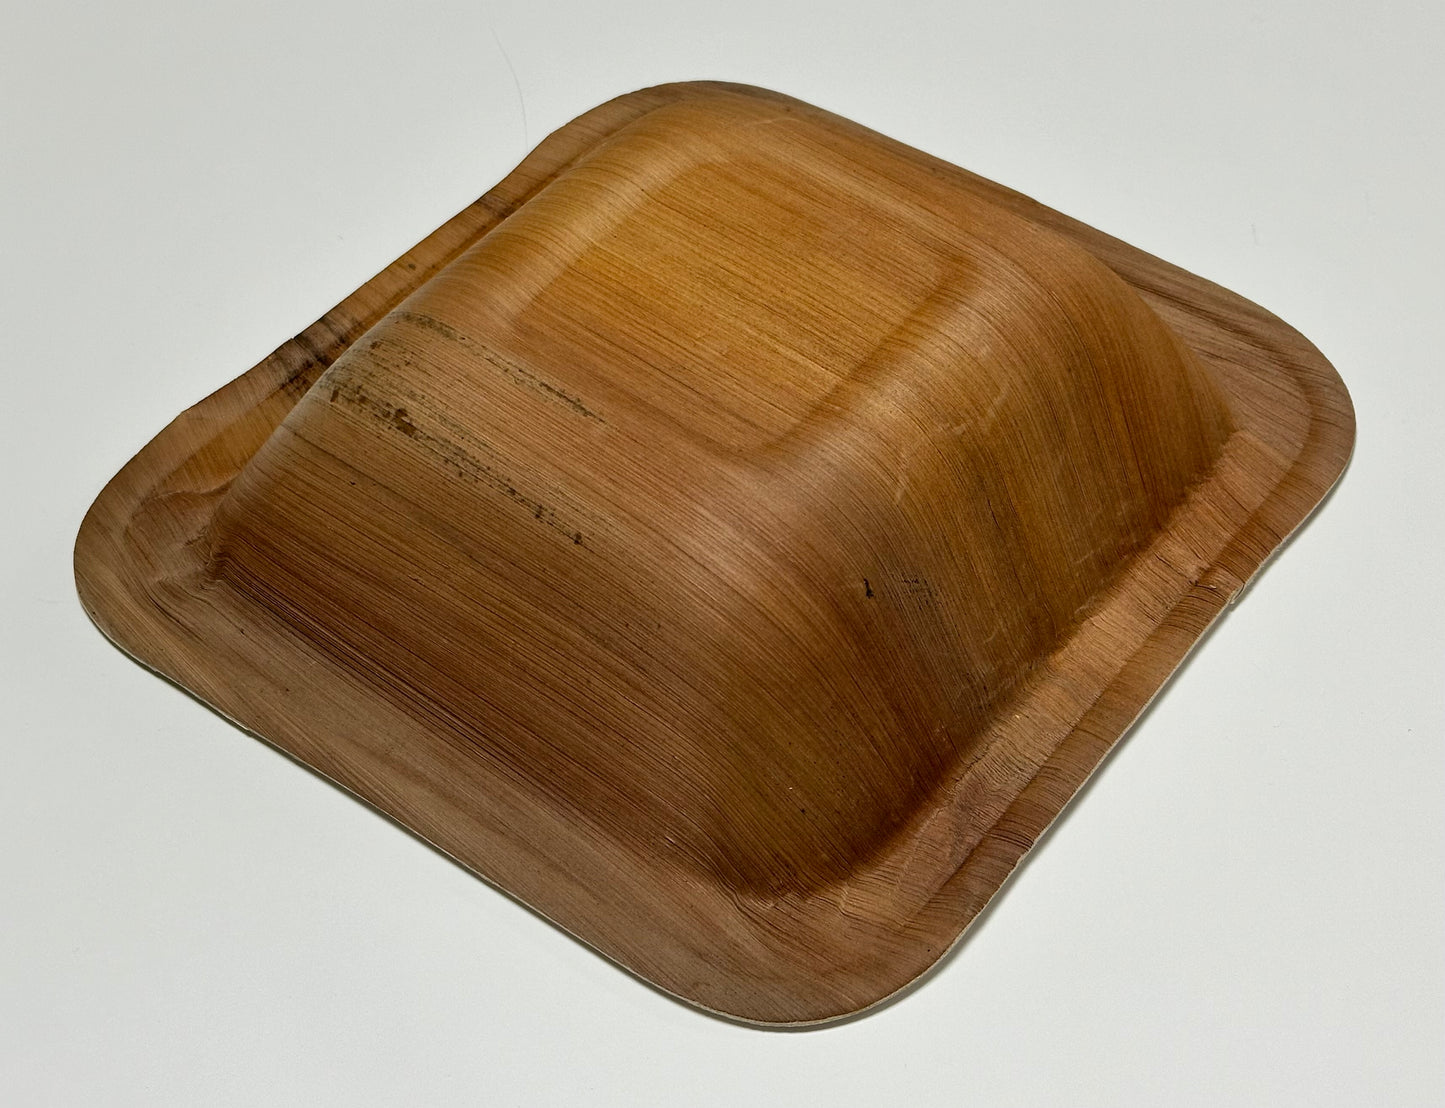 Siegelbare Bio-Bowl aus Palmblatt, natur, ungeteilt, 1.800ml, 260x278x63mm, plastikfrei, kompostierbar, 100 Stück